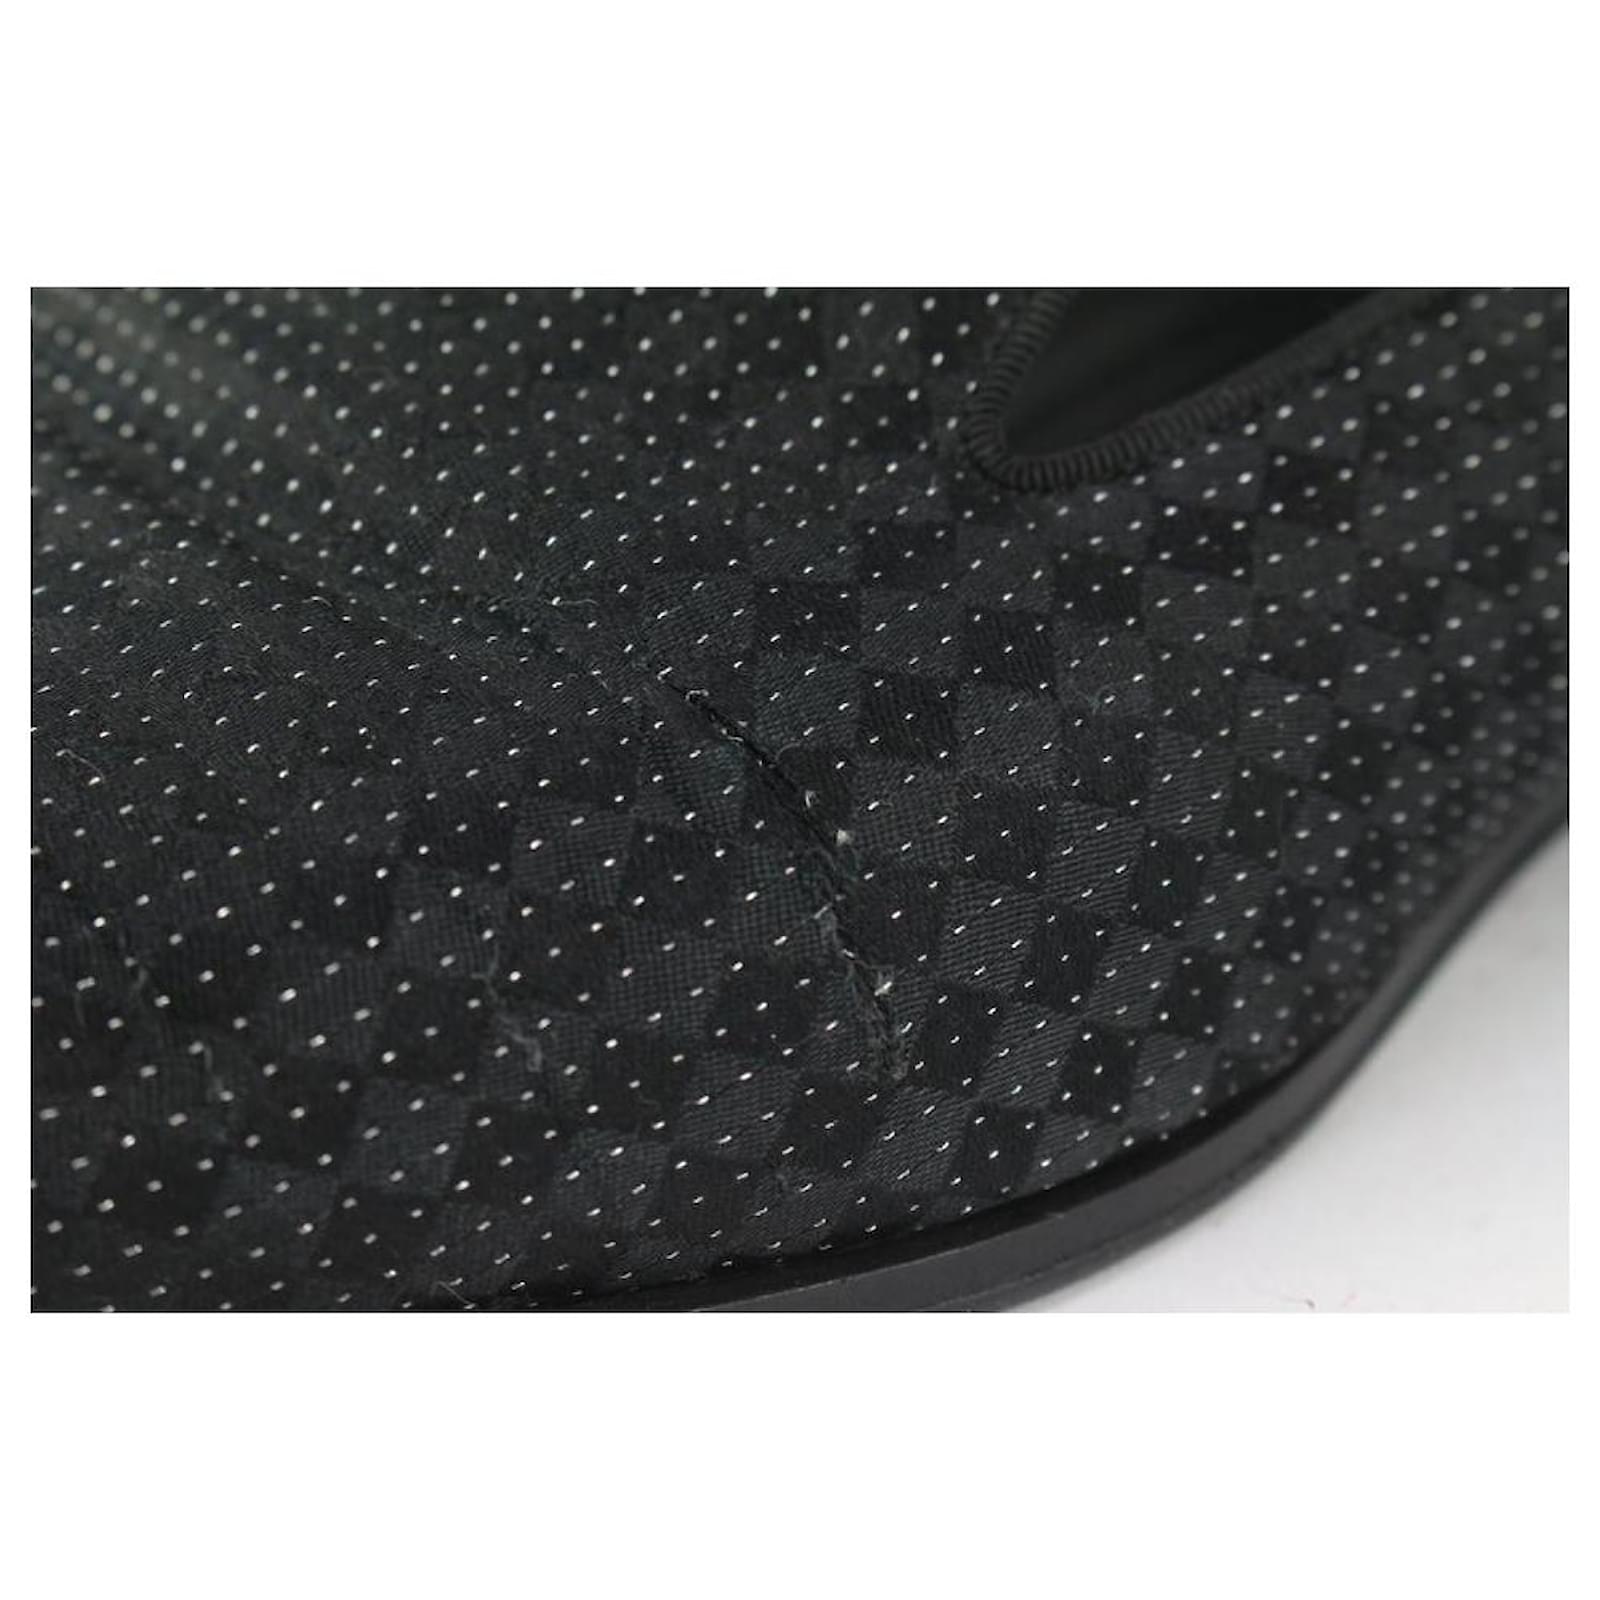 Louis Vuitton Mens US 9 Black Damier Sparkle Slip On Loafer Dress